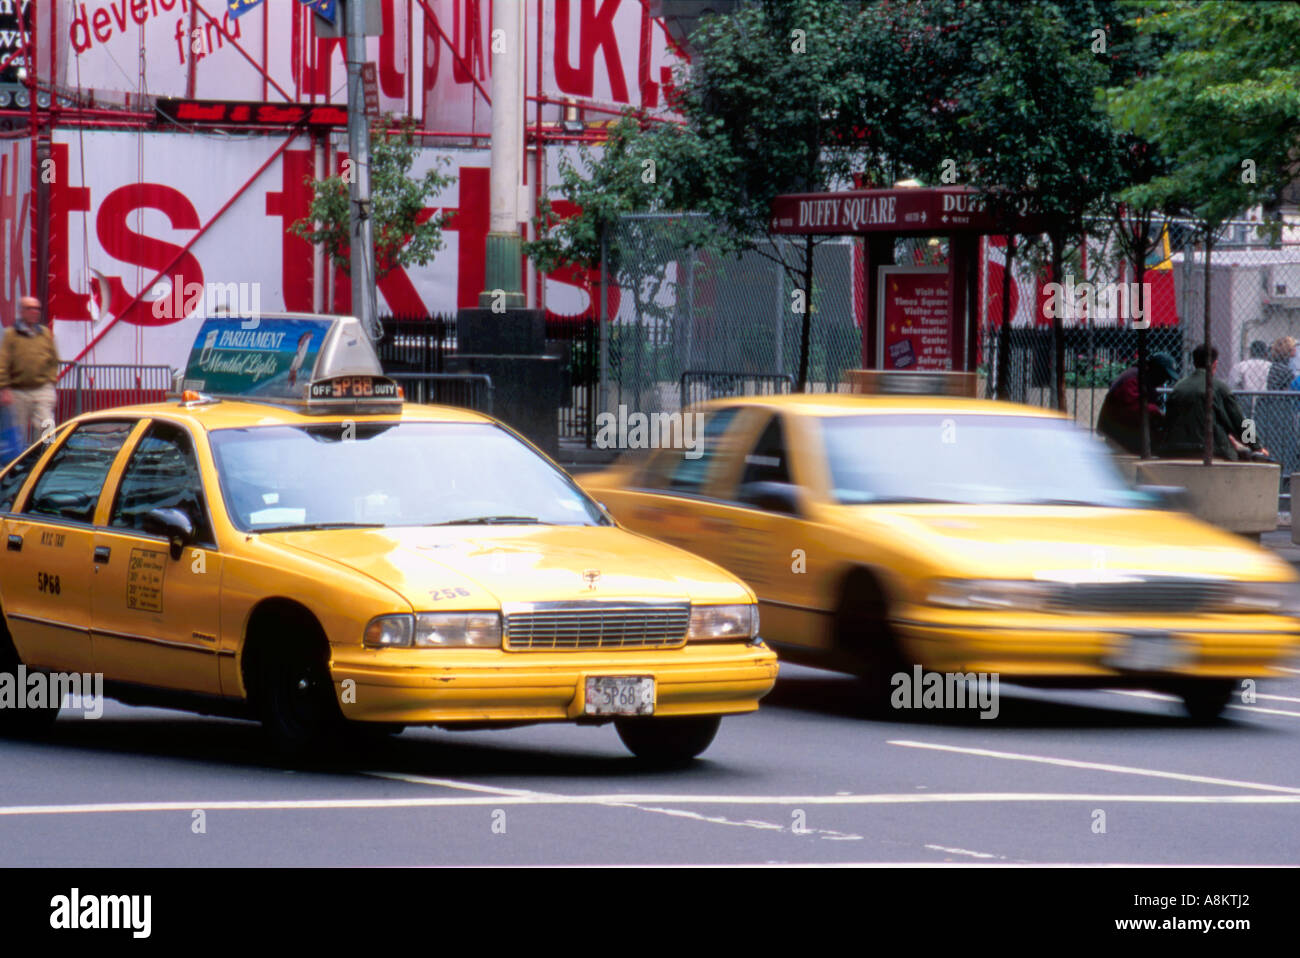 yellow-cab-new-york-city-usa-A8KTJ2.jpg